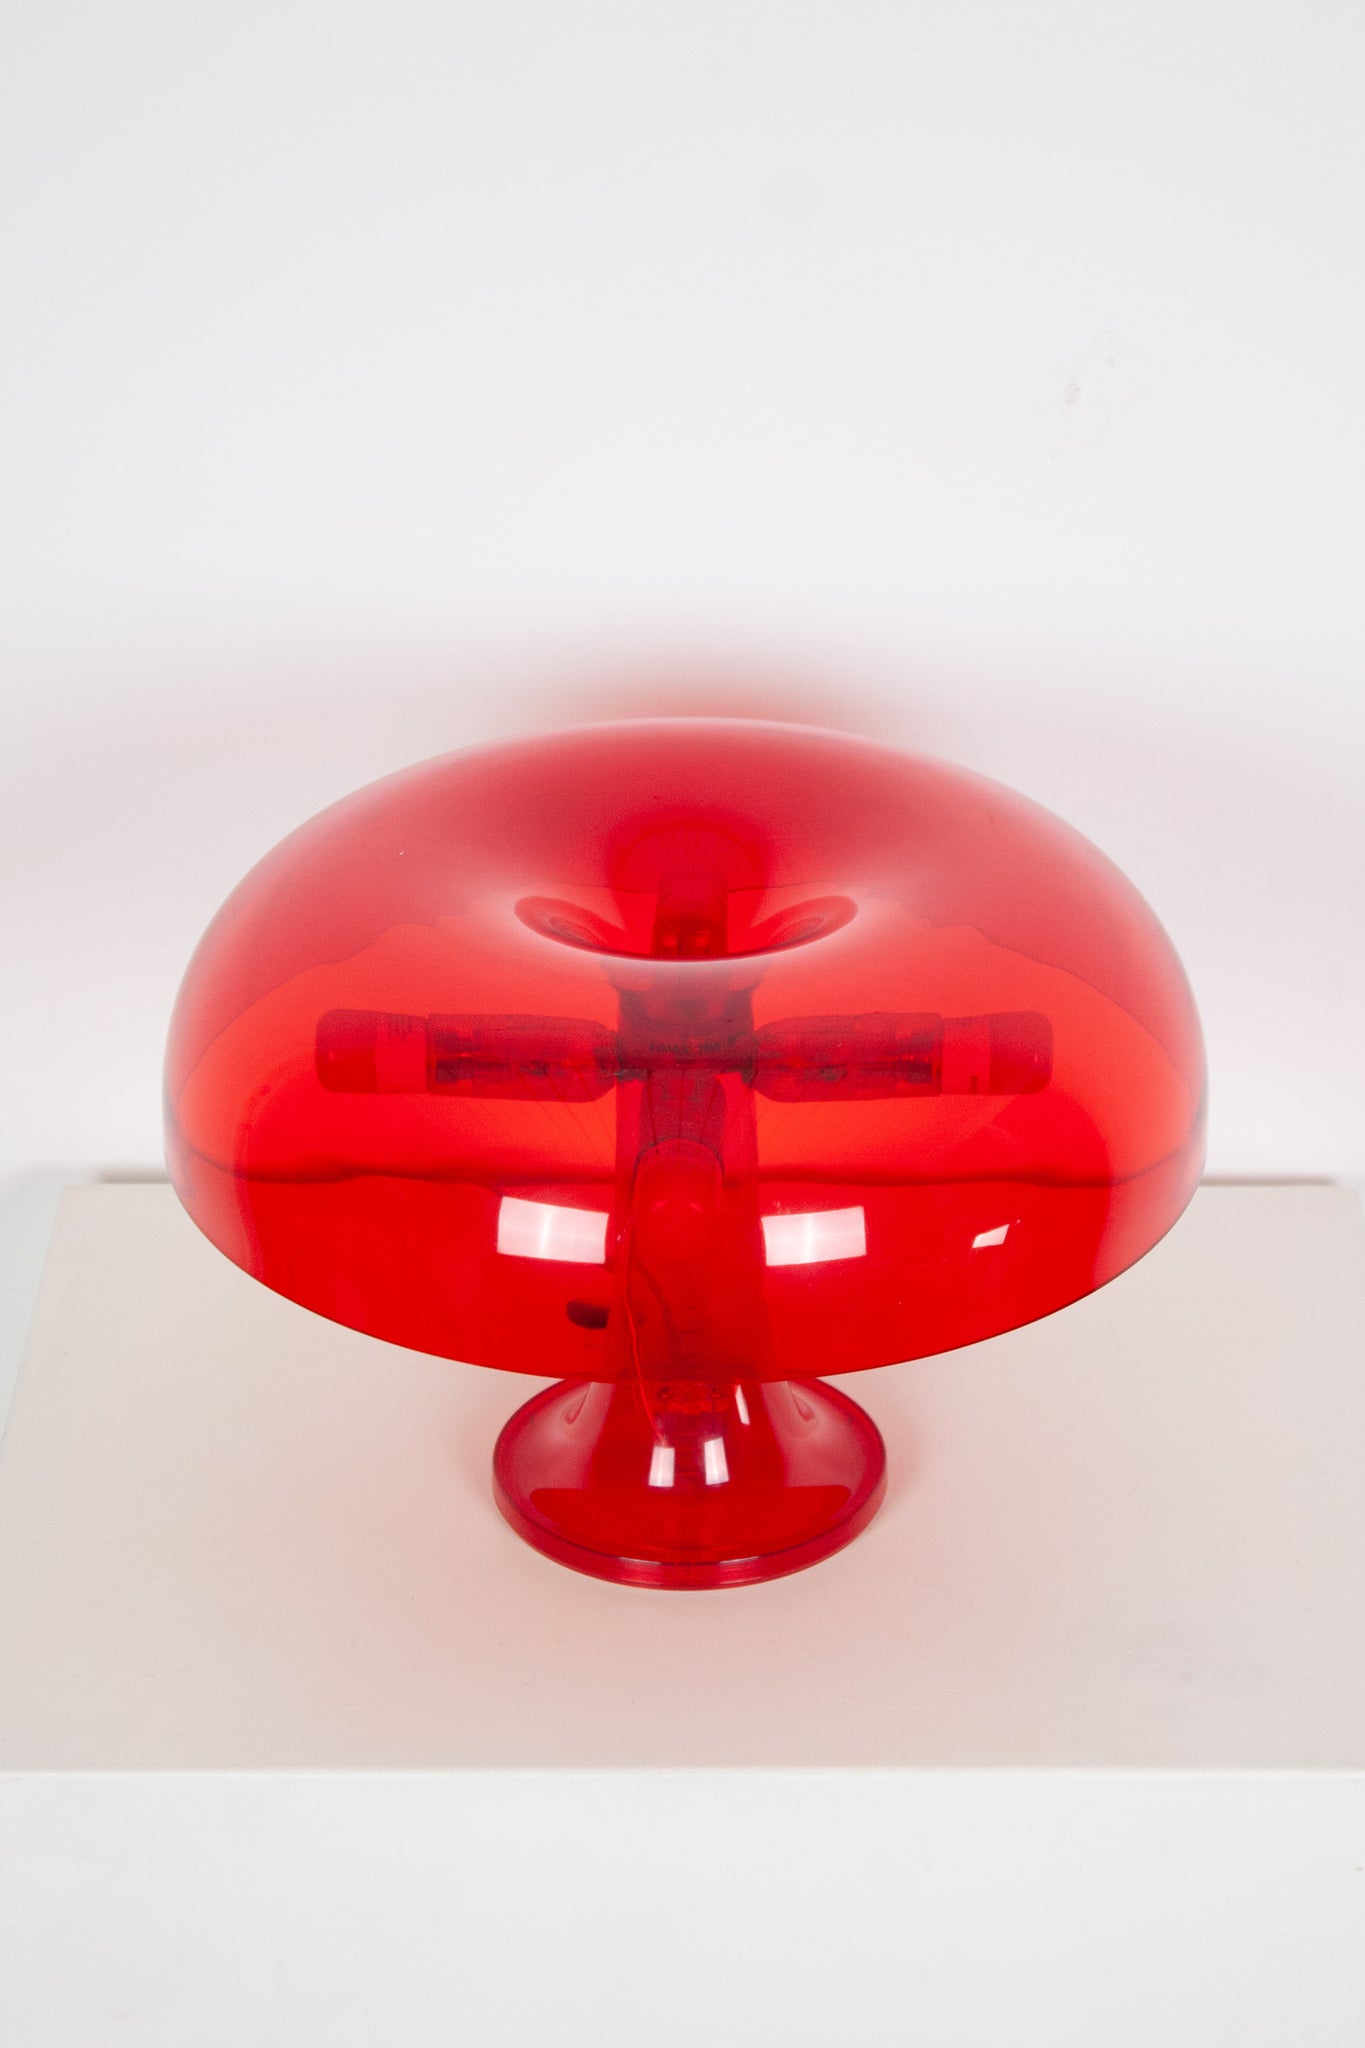 Artemide Nessino Table Lamp by Giancarlo Mattioli (Translucent Red)